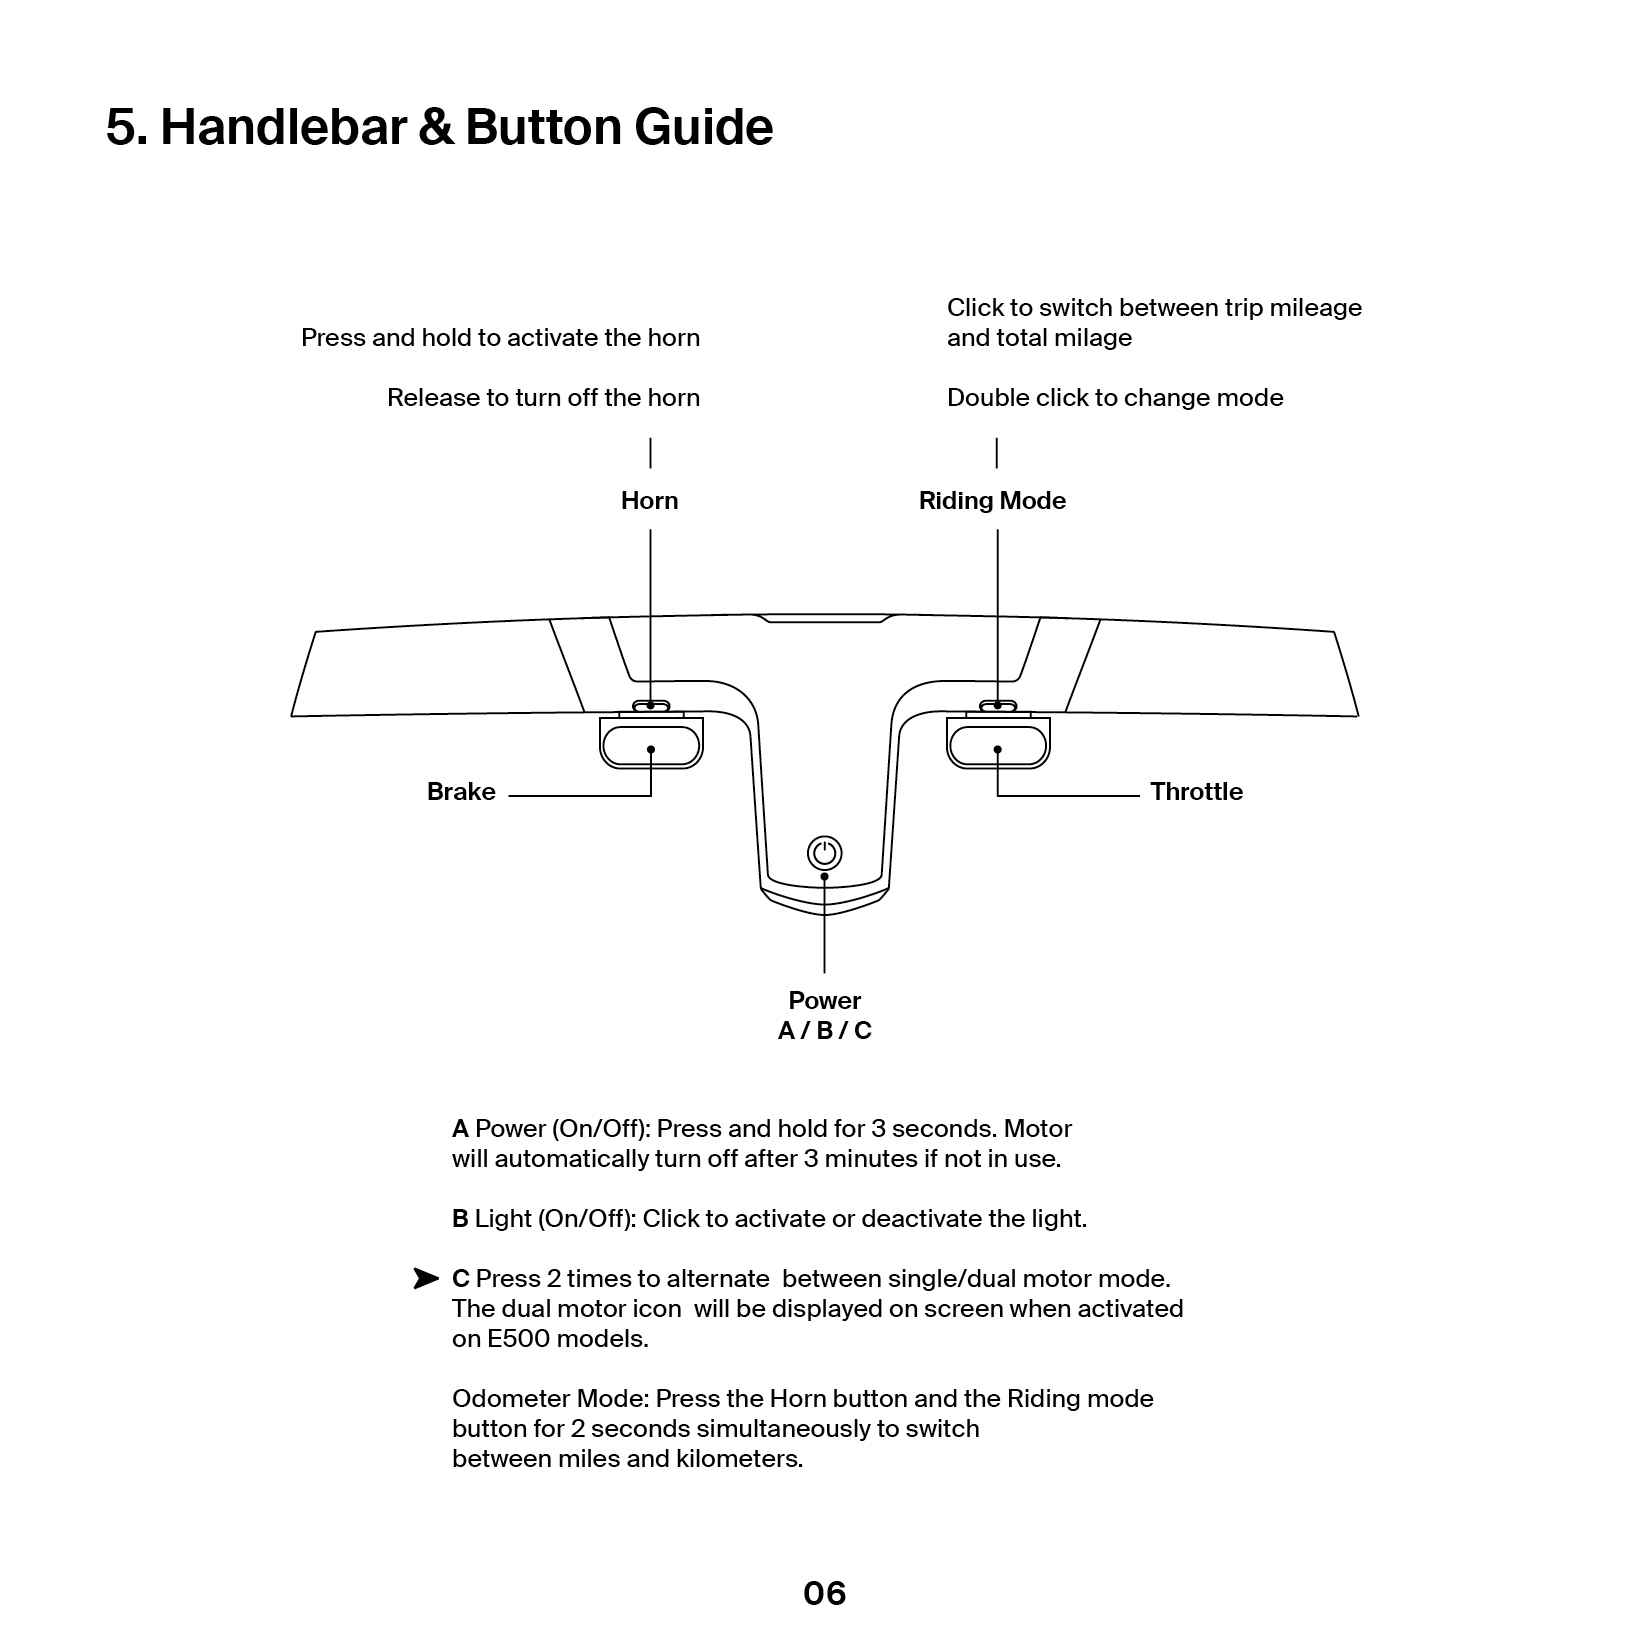 Handlebar & Button Guide